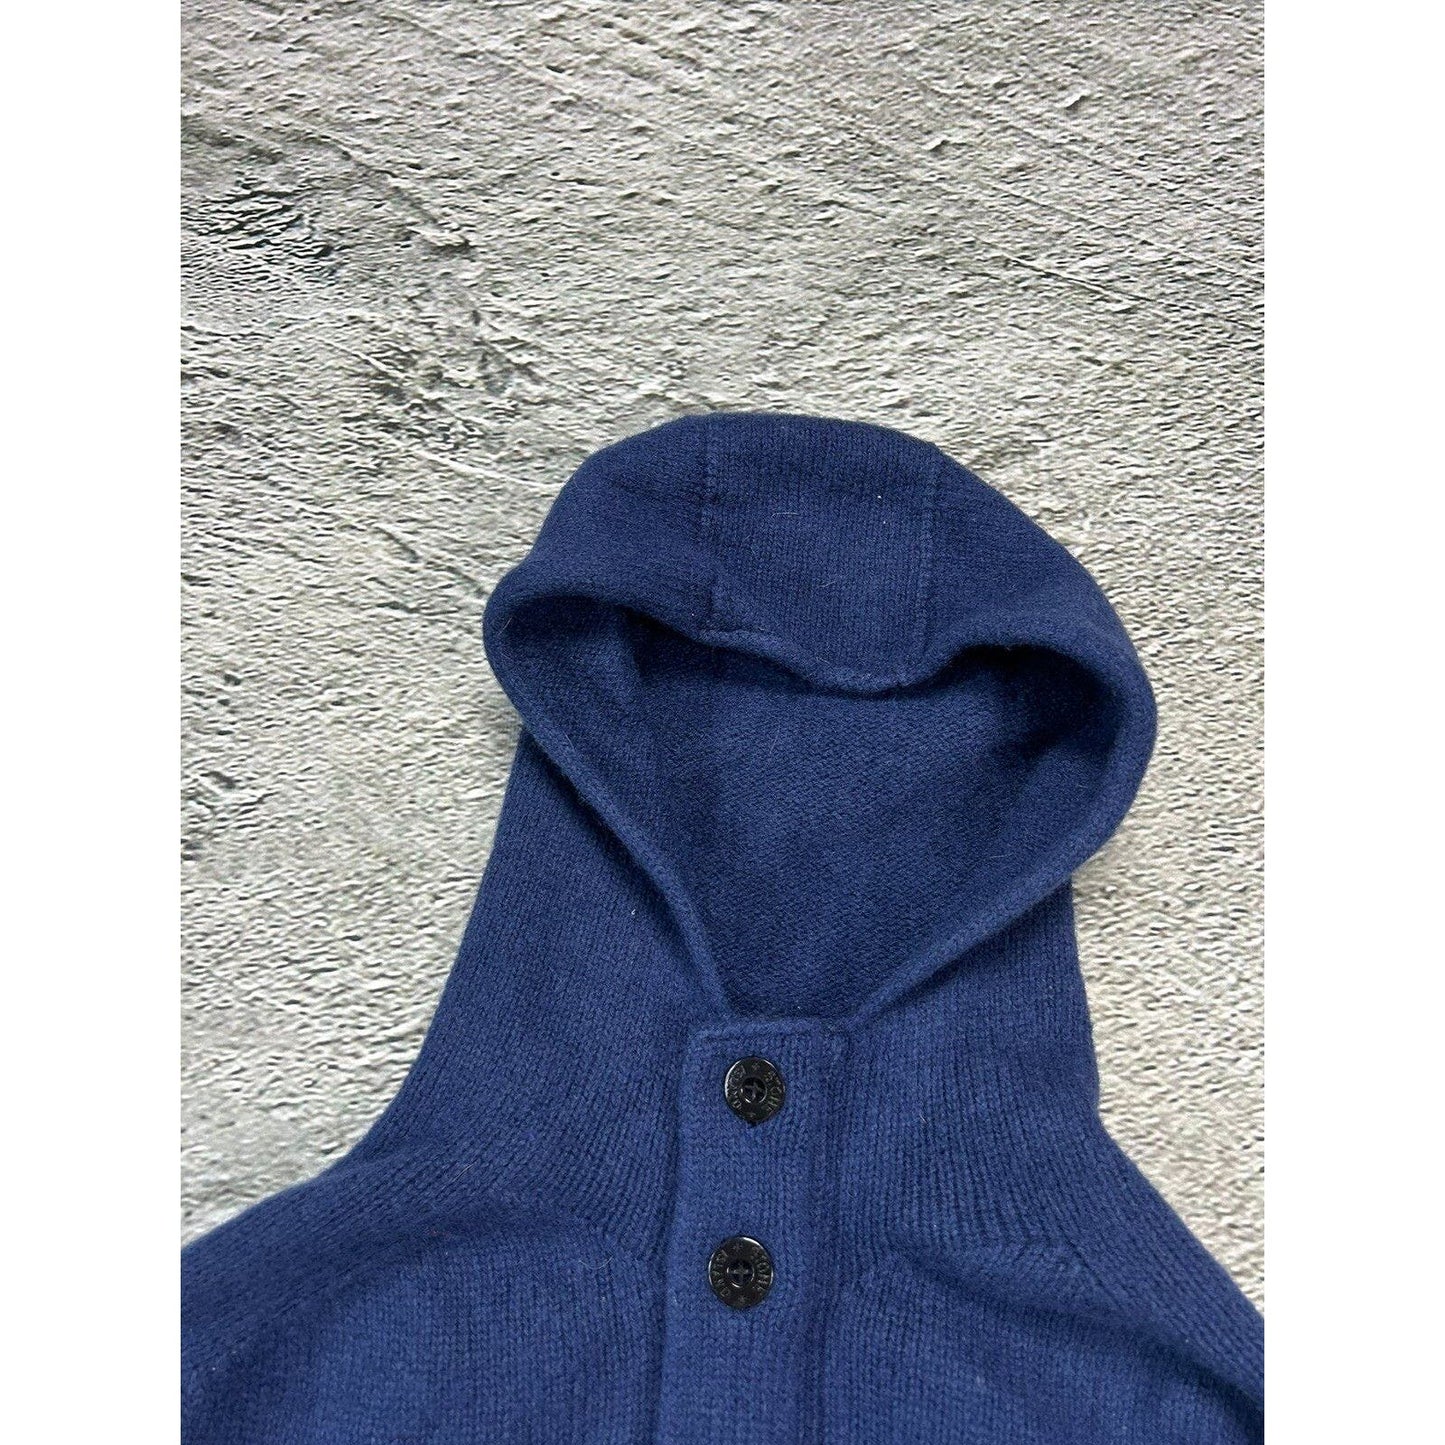 Stone Island zip hoodie knit blue vintage sweater AW 2005